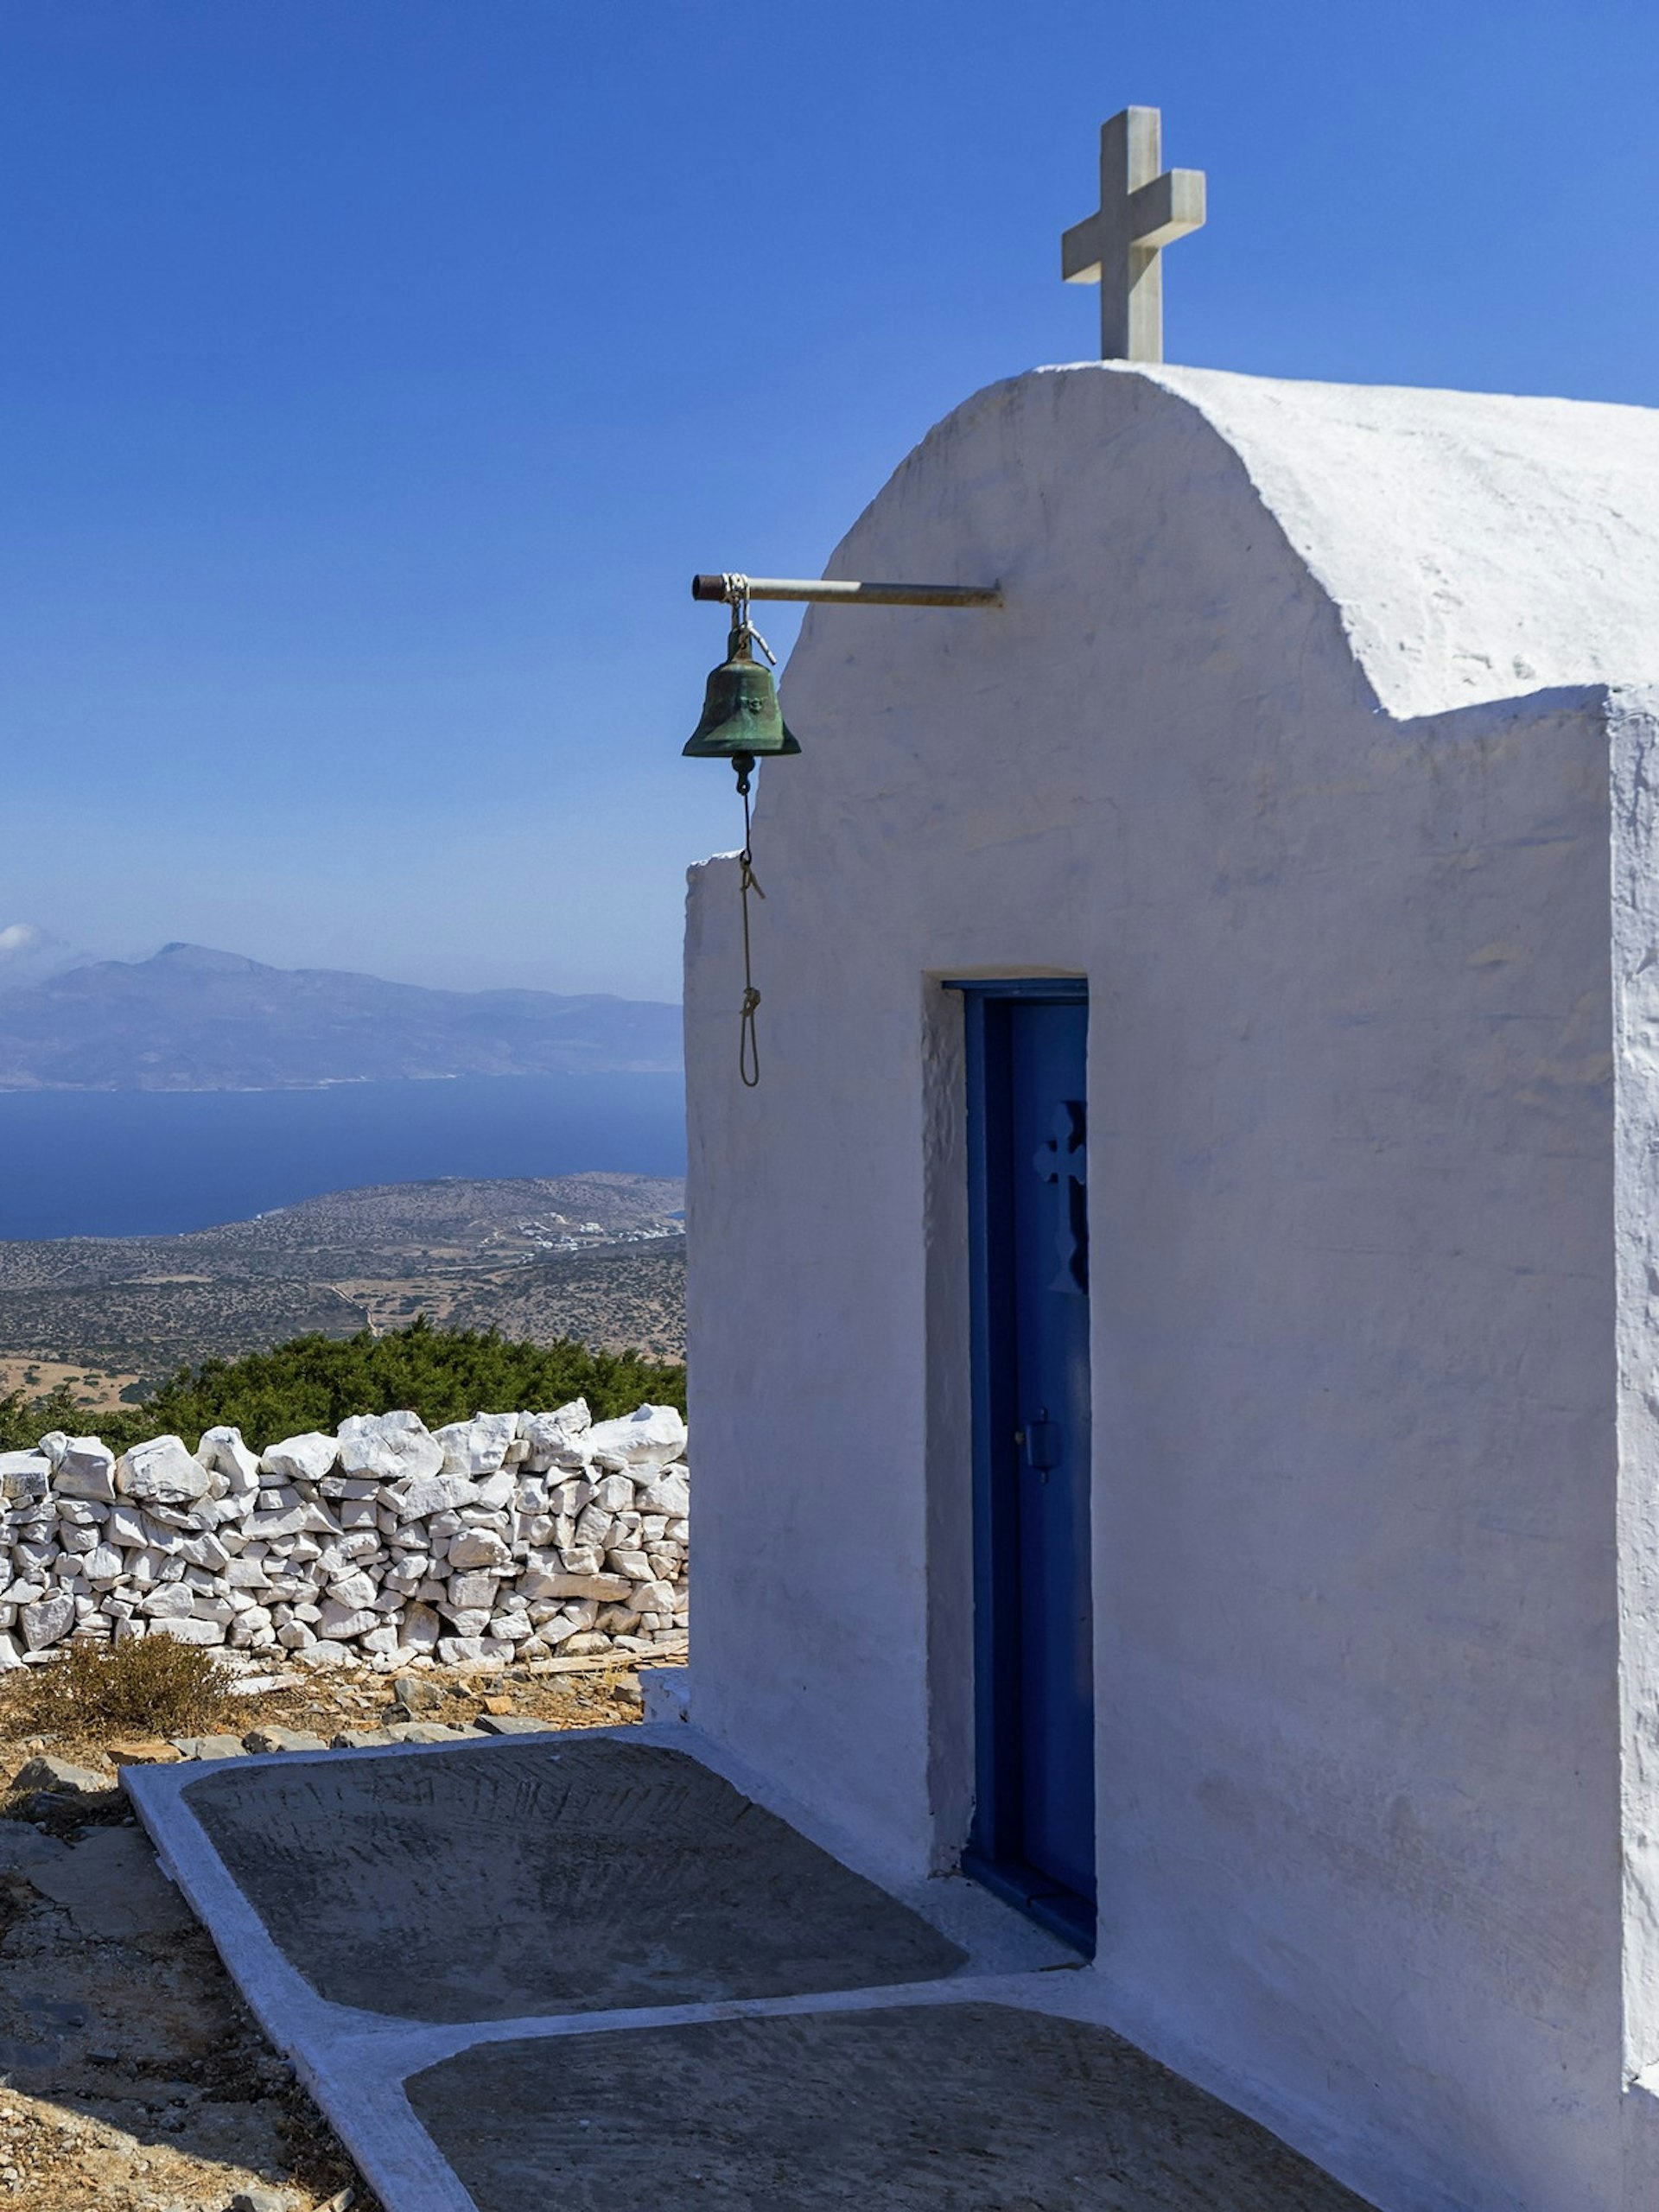 Solitary chapel on a hilltop overlooking Iraklia island © kokixx / Shutterstock